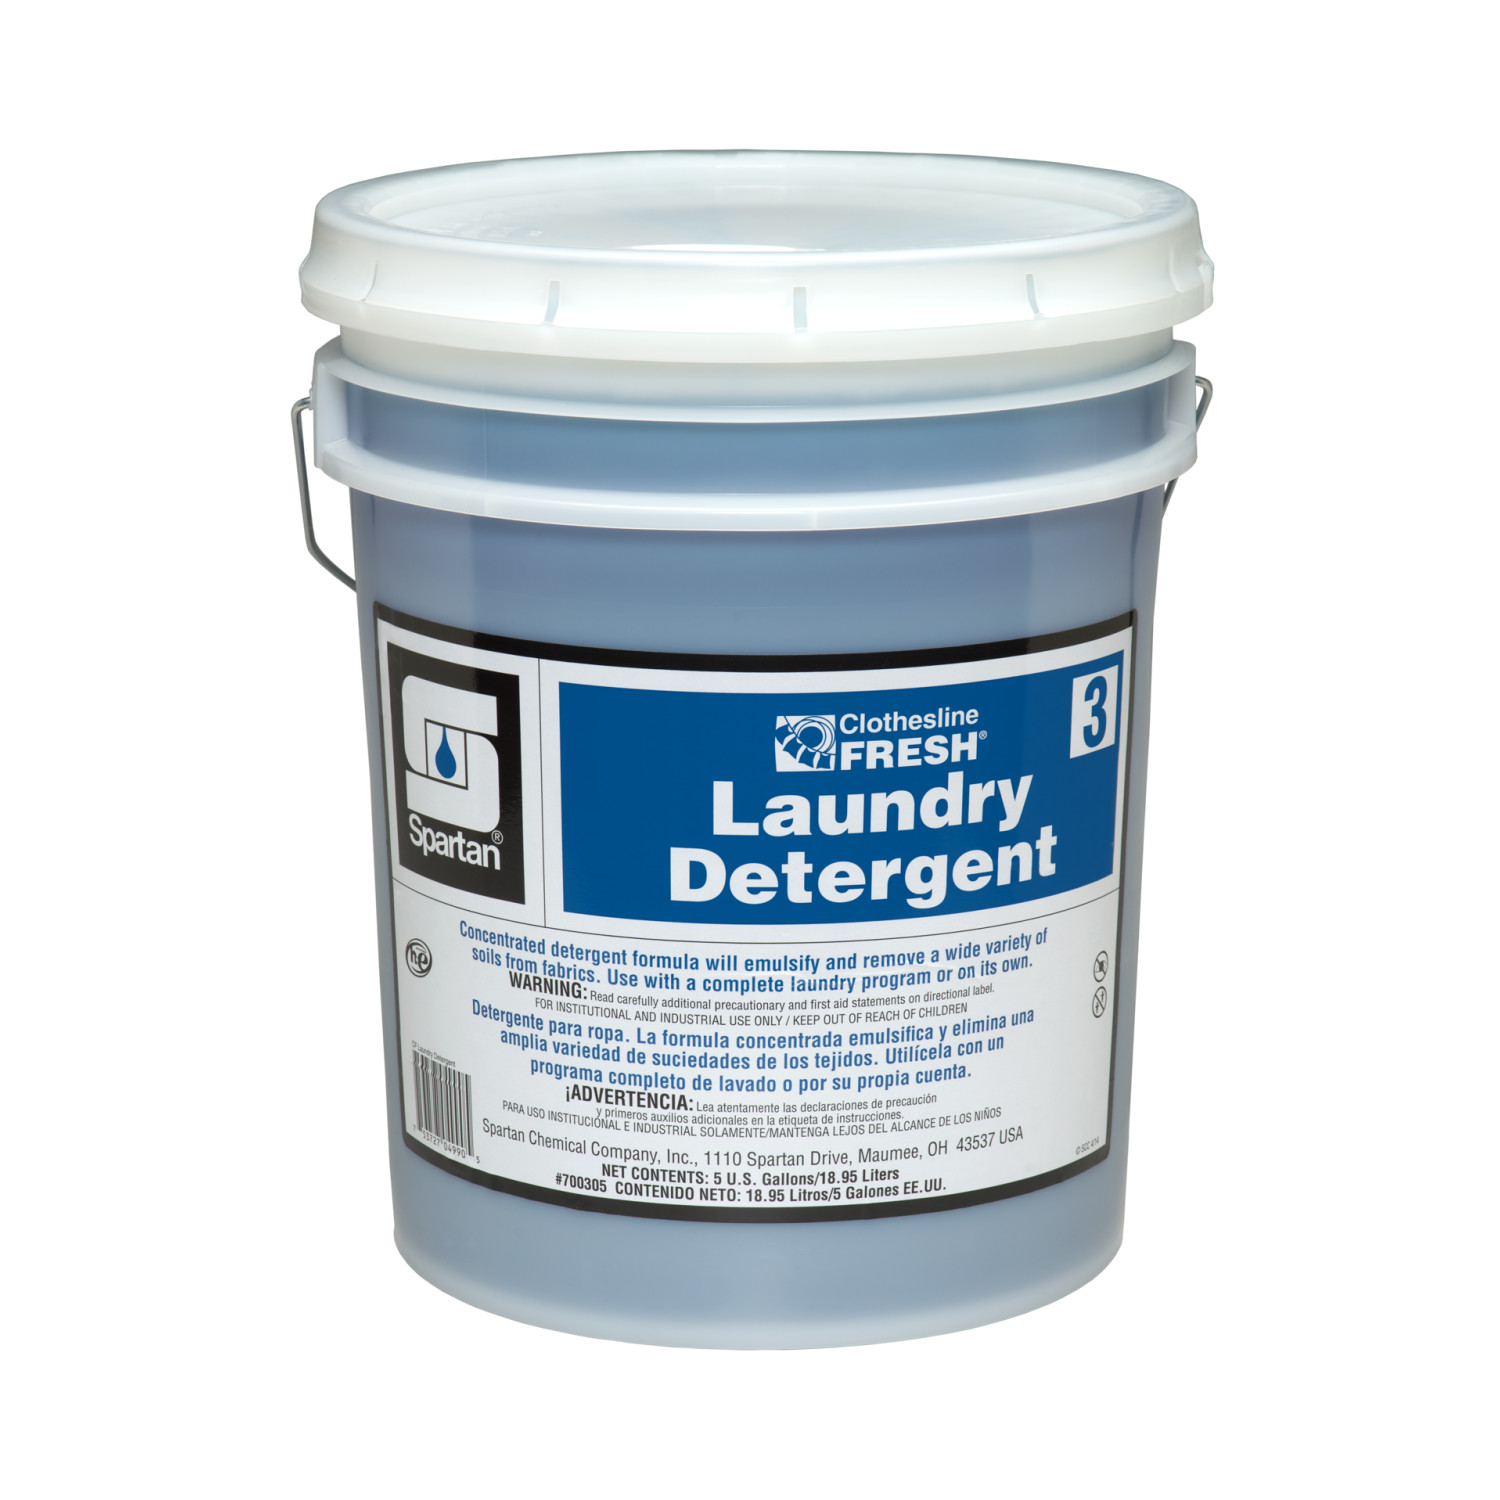 https://discountjanitorialsupplies.com/wp-content/uploads/Spartan-Clothesline-Fresh-Laundry-Detergent-3-5-Gal.jpg